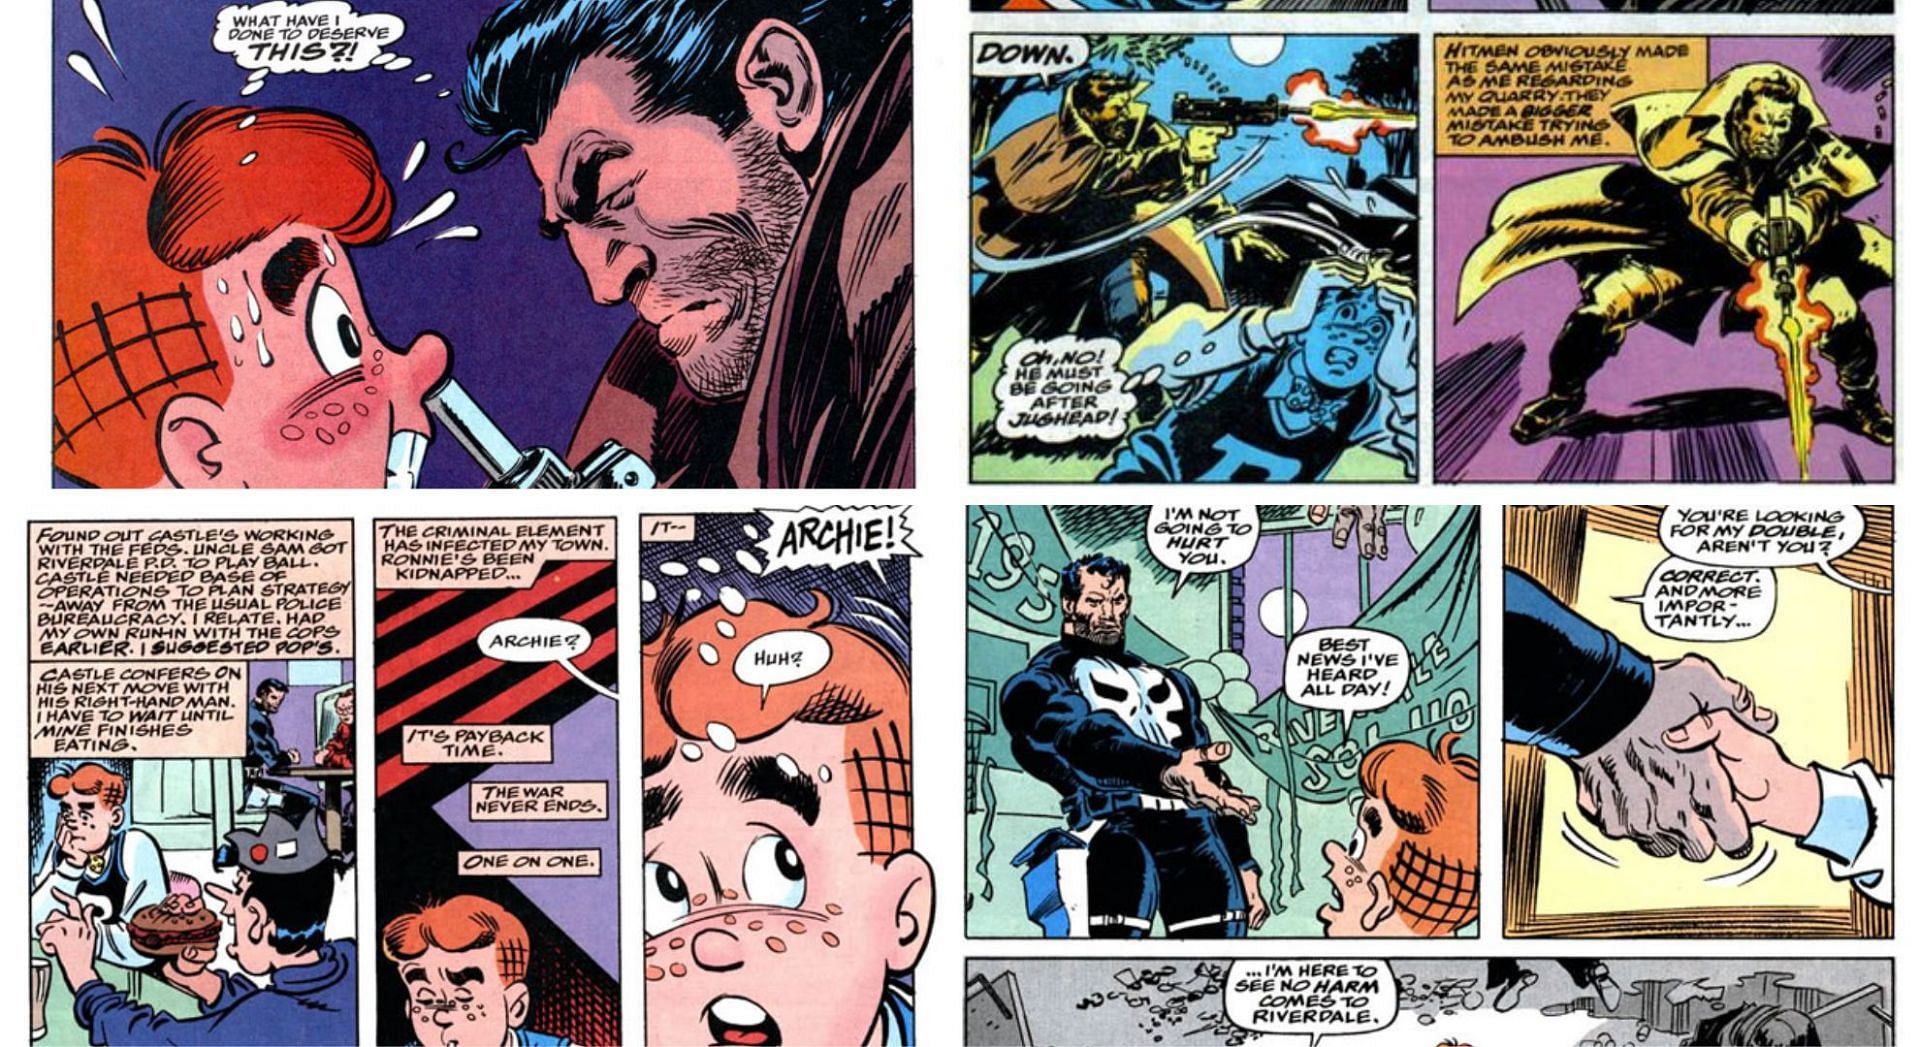 Archie meets The Punisher (Image via Sportskeeda)